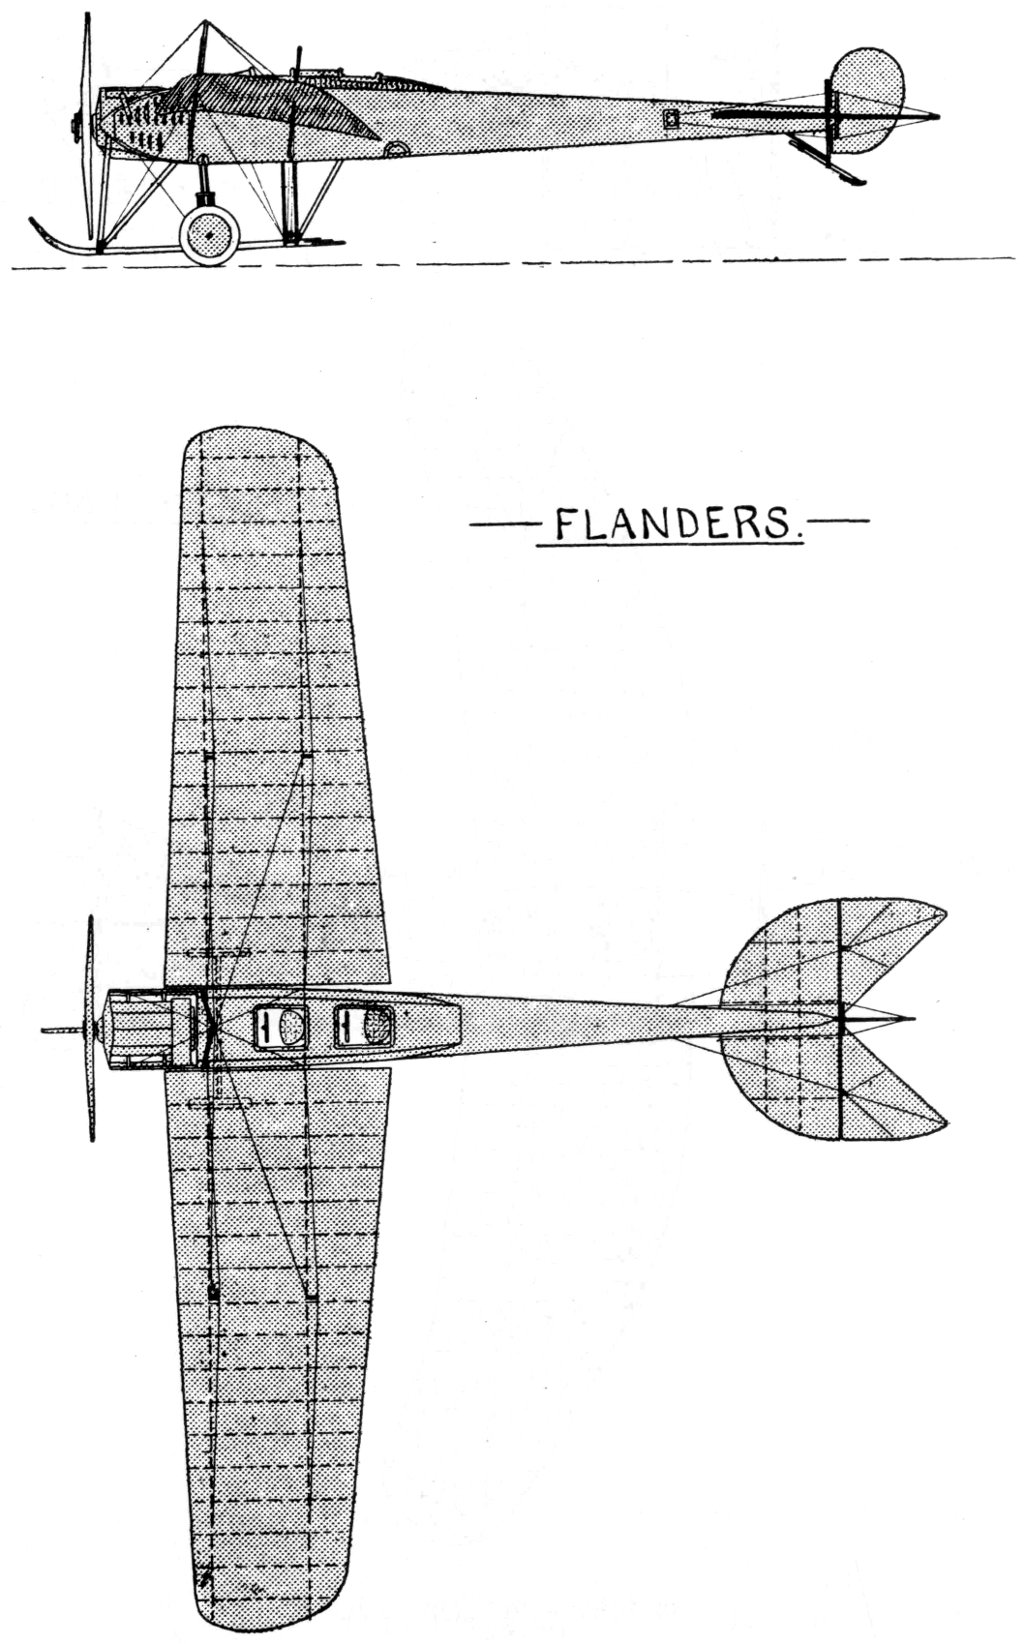 FLANDERS. Uniform Aeroplane Scale